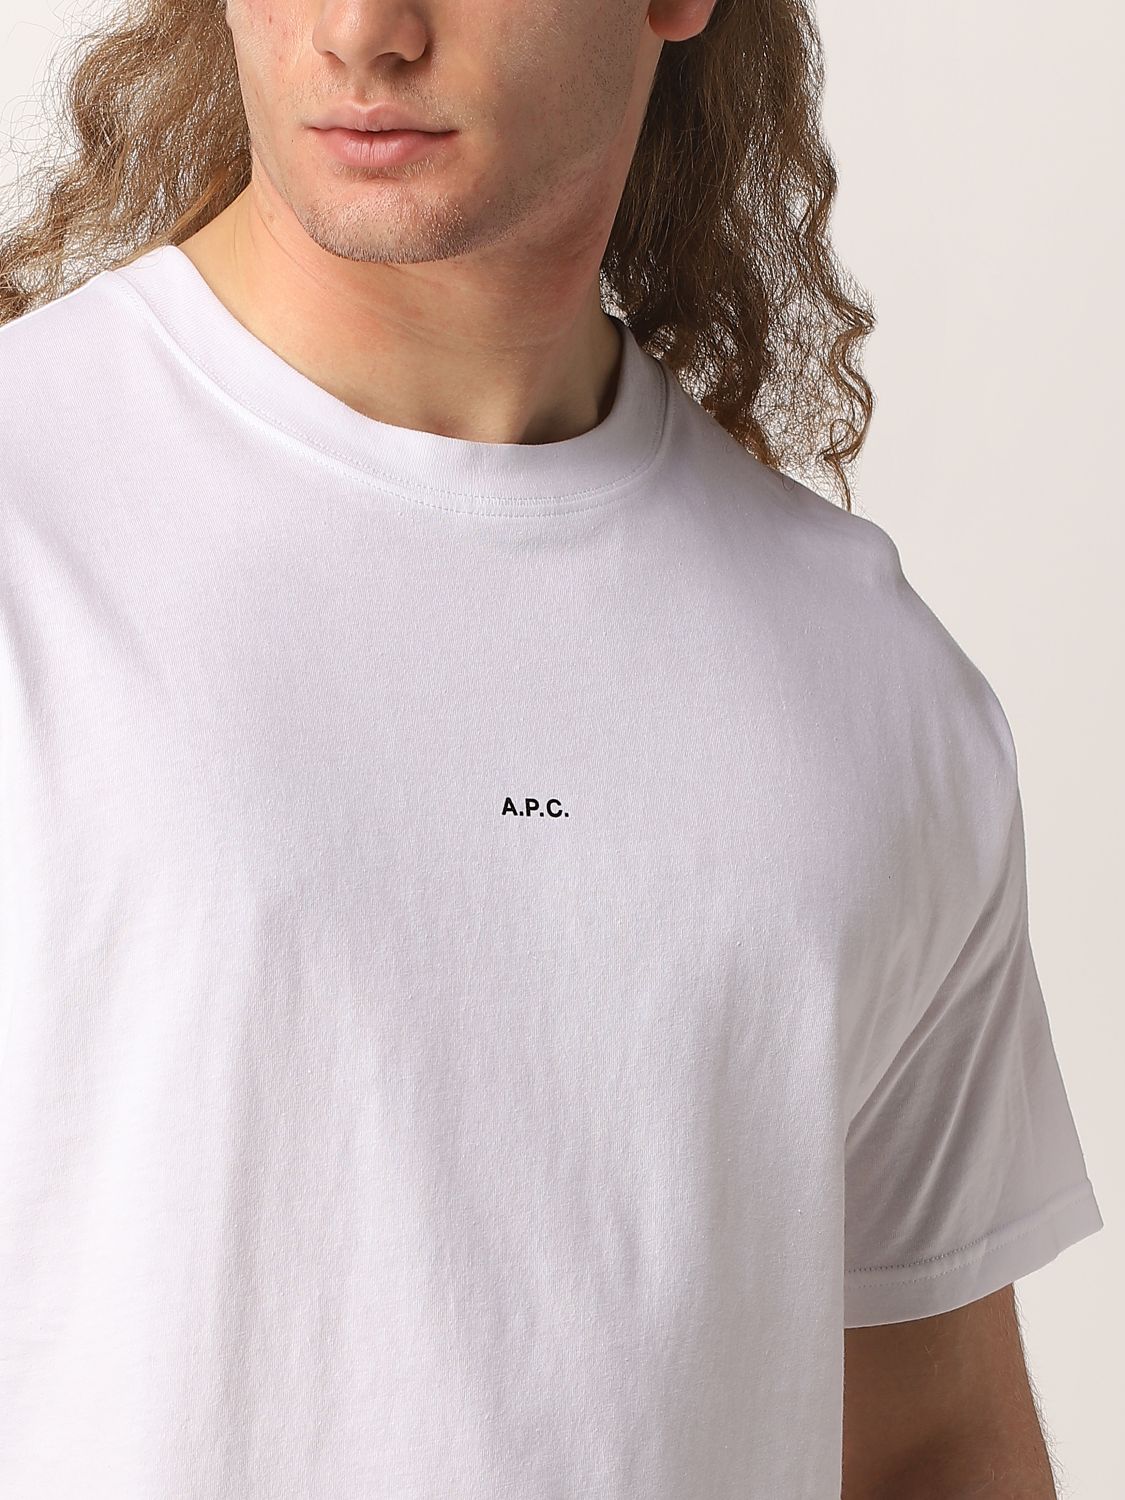 A.P.C.: cotton jersey T-shirt with mini logo | T-Shirt A.p.c. Men 